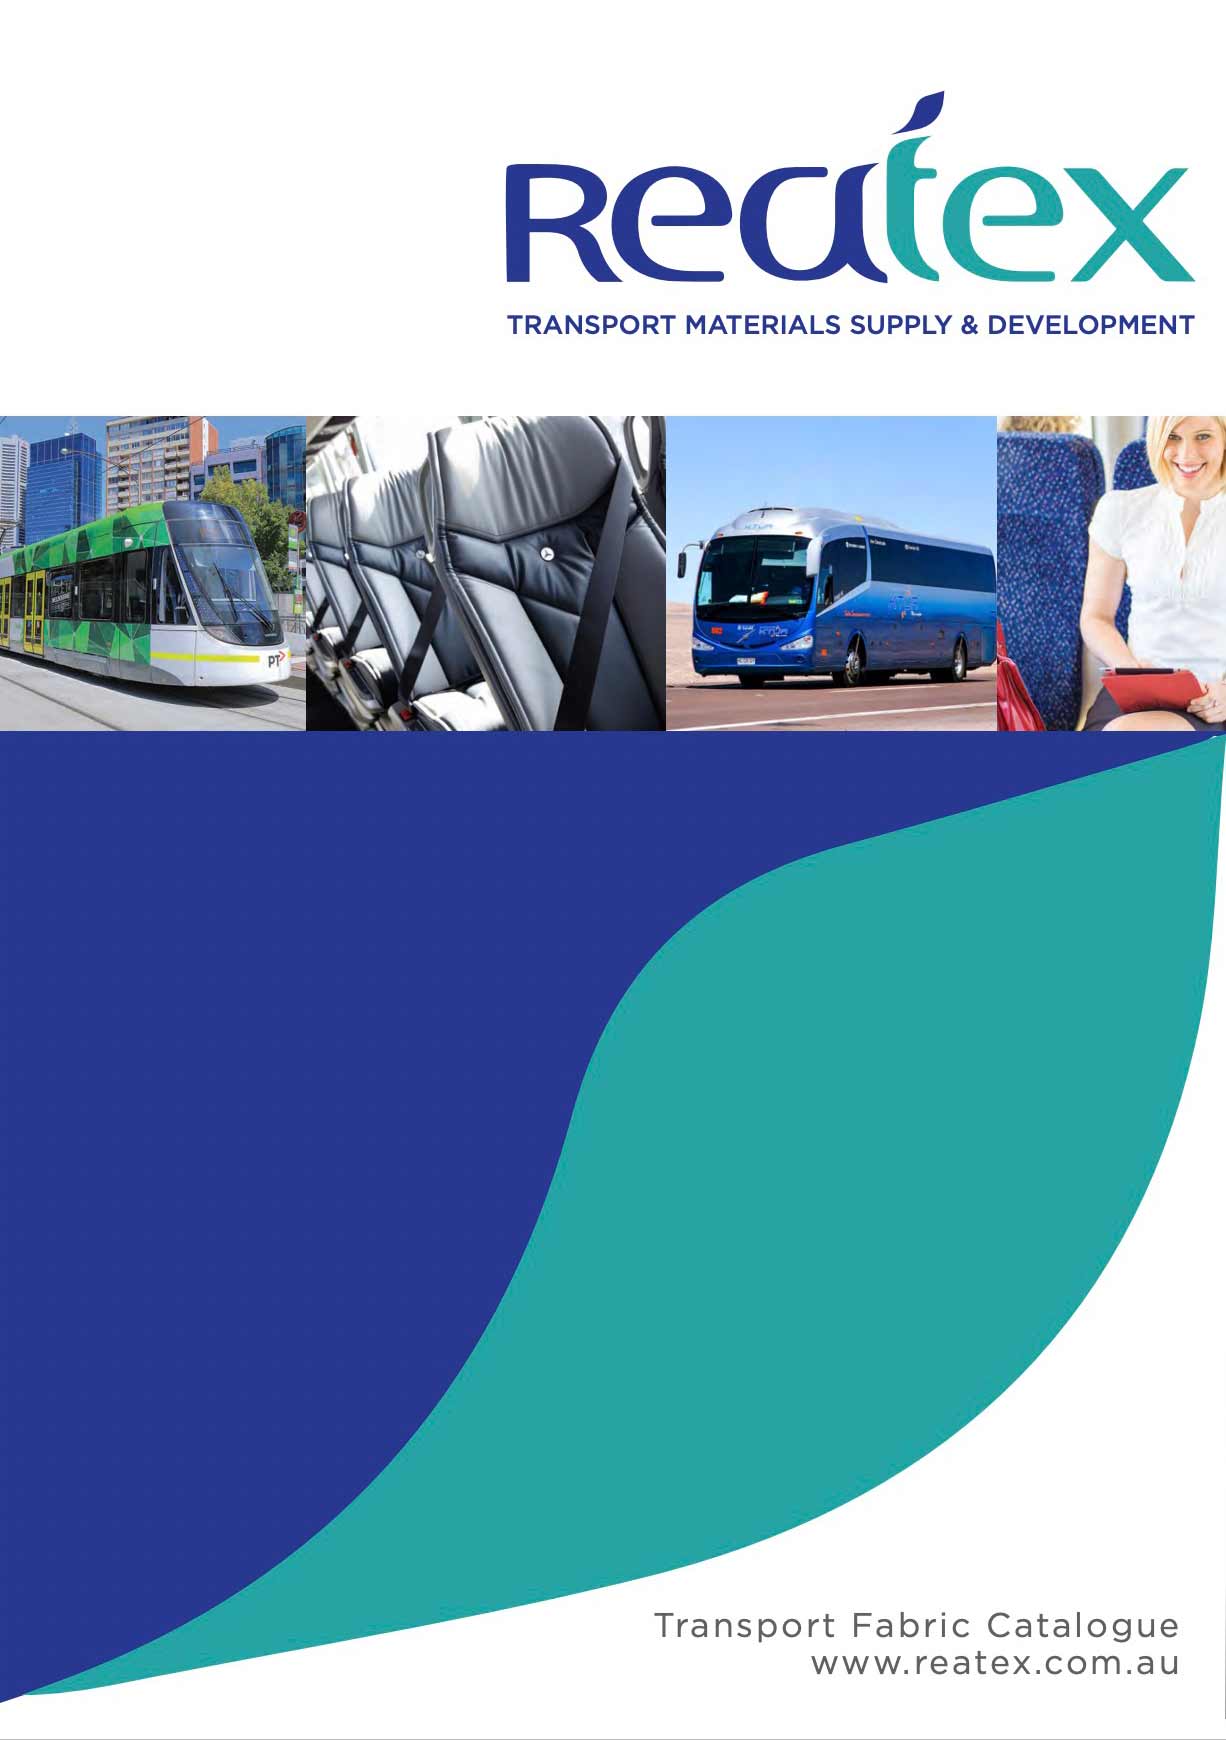 Reatex – Transport Fabric Catalogue